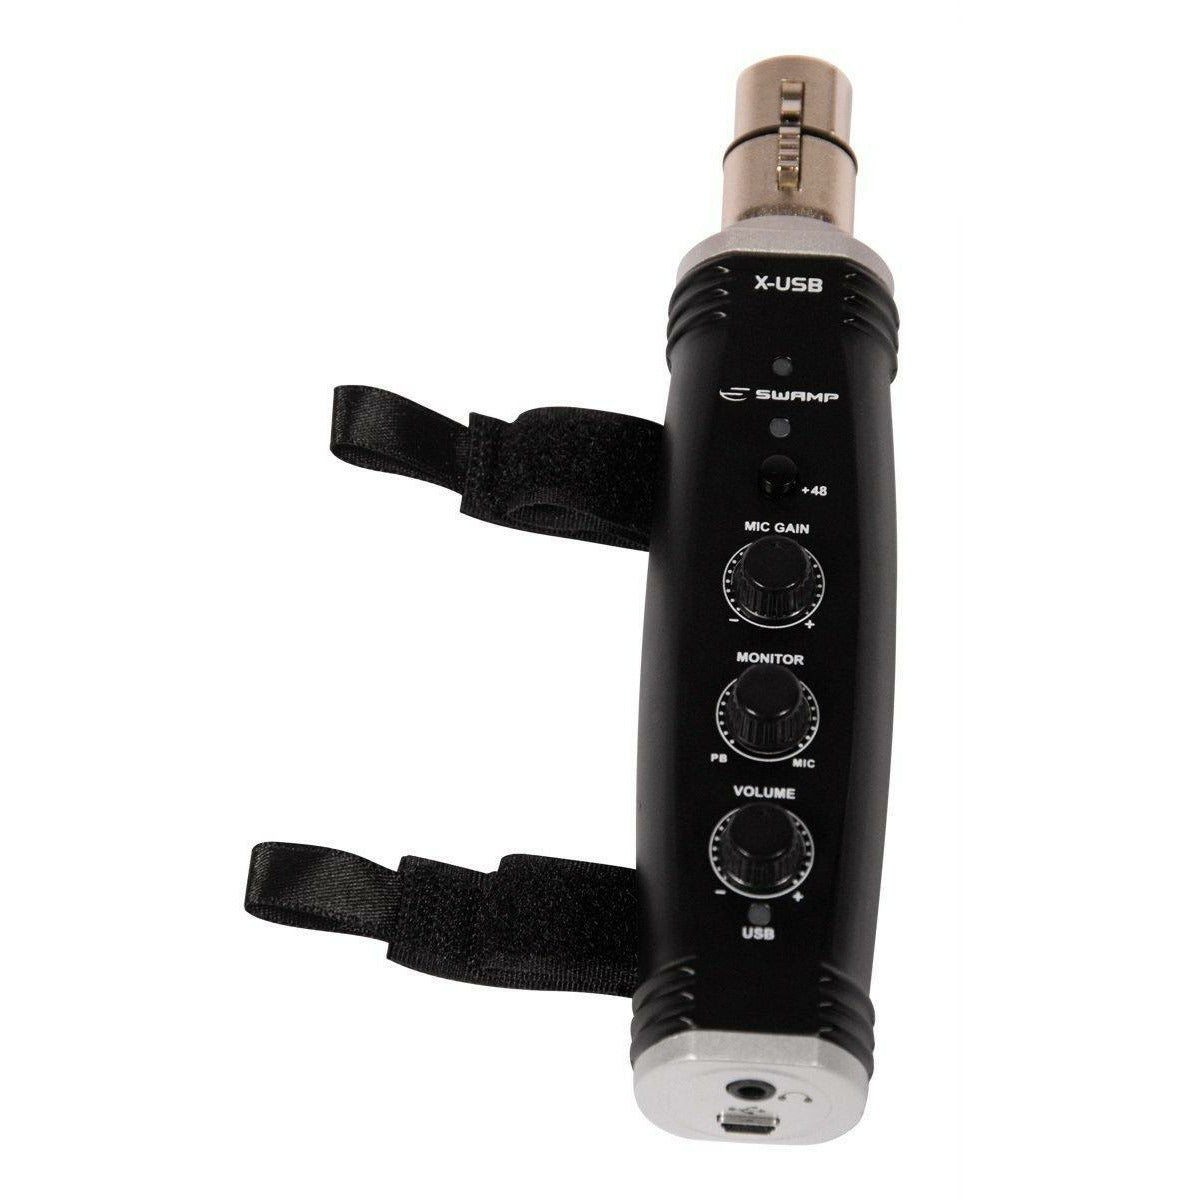 X-USB - XLR to USB Microphone Preamp | Computer Audio Interface - Dragon Image